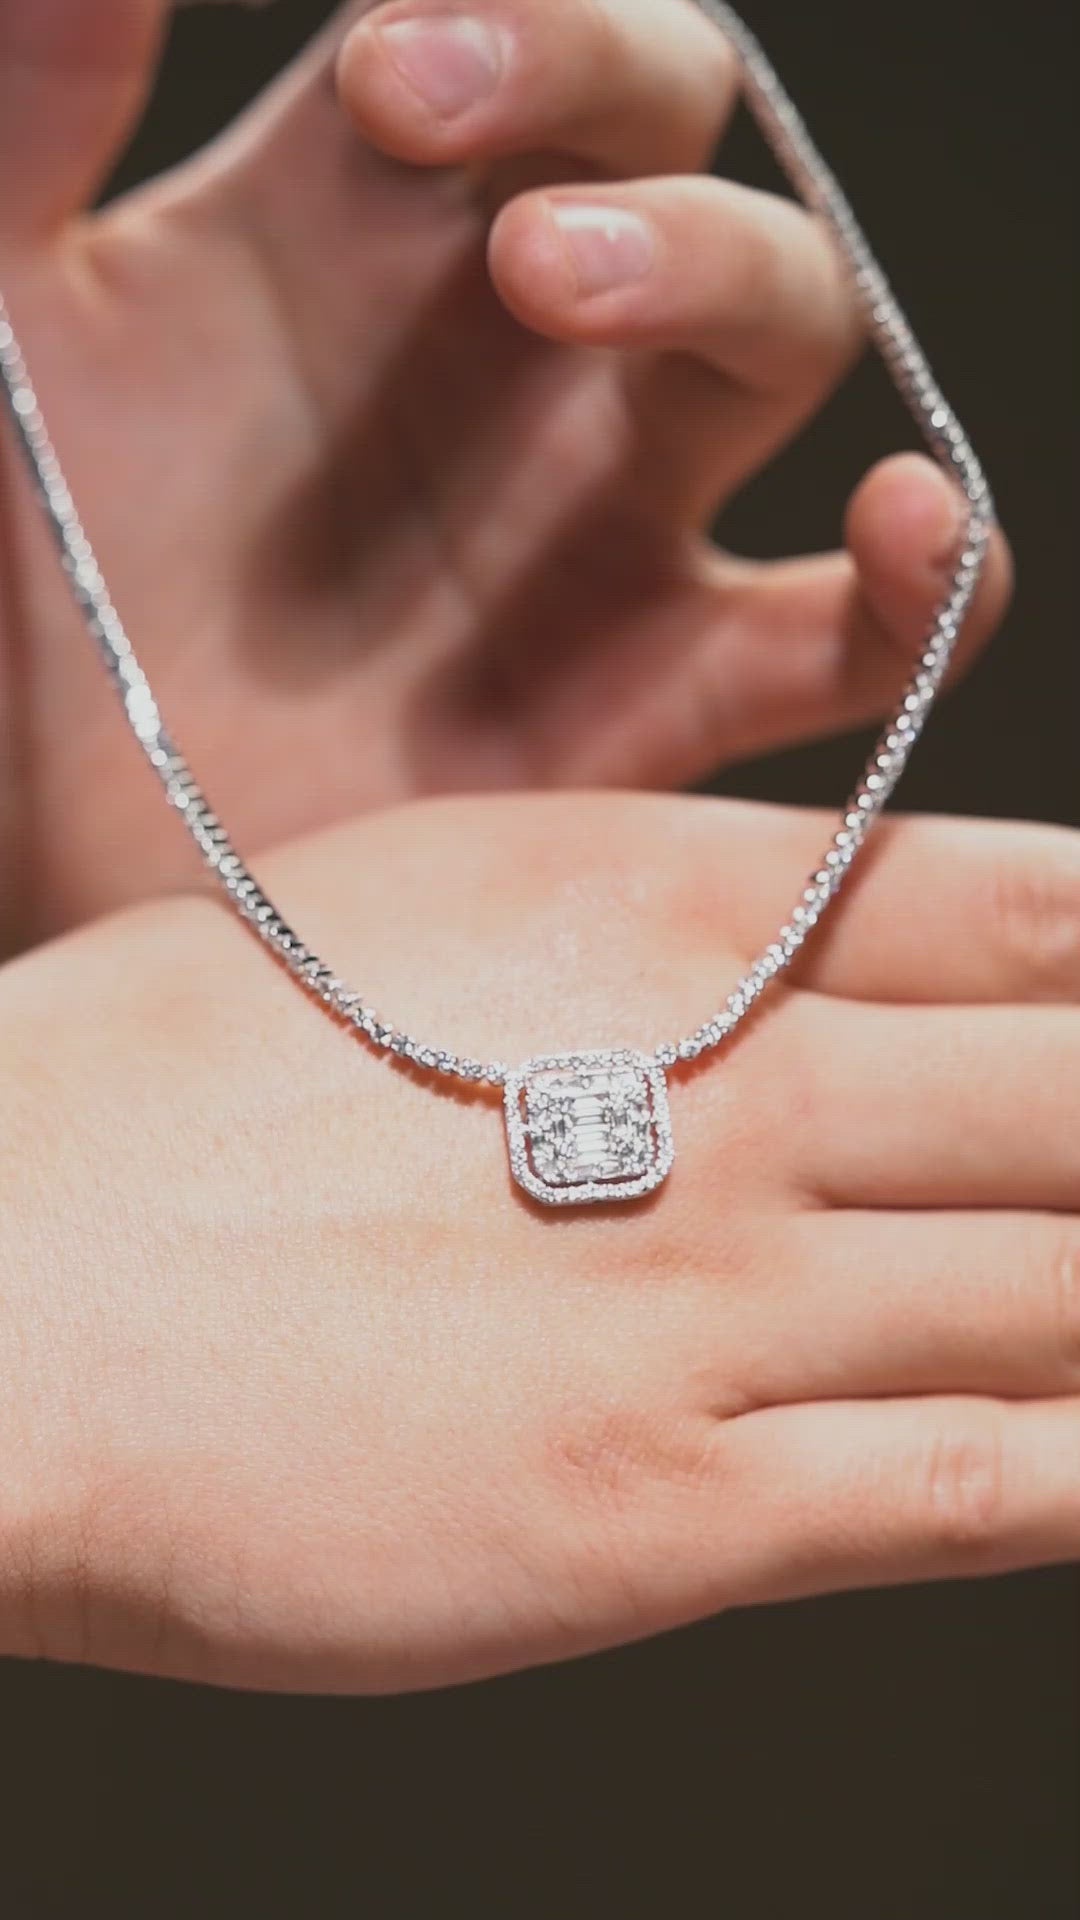 Emerald Shaped Diamond Necklace 18K White Gold